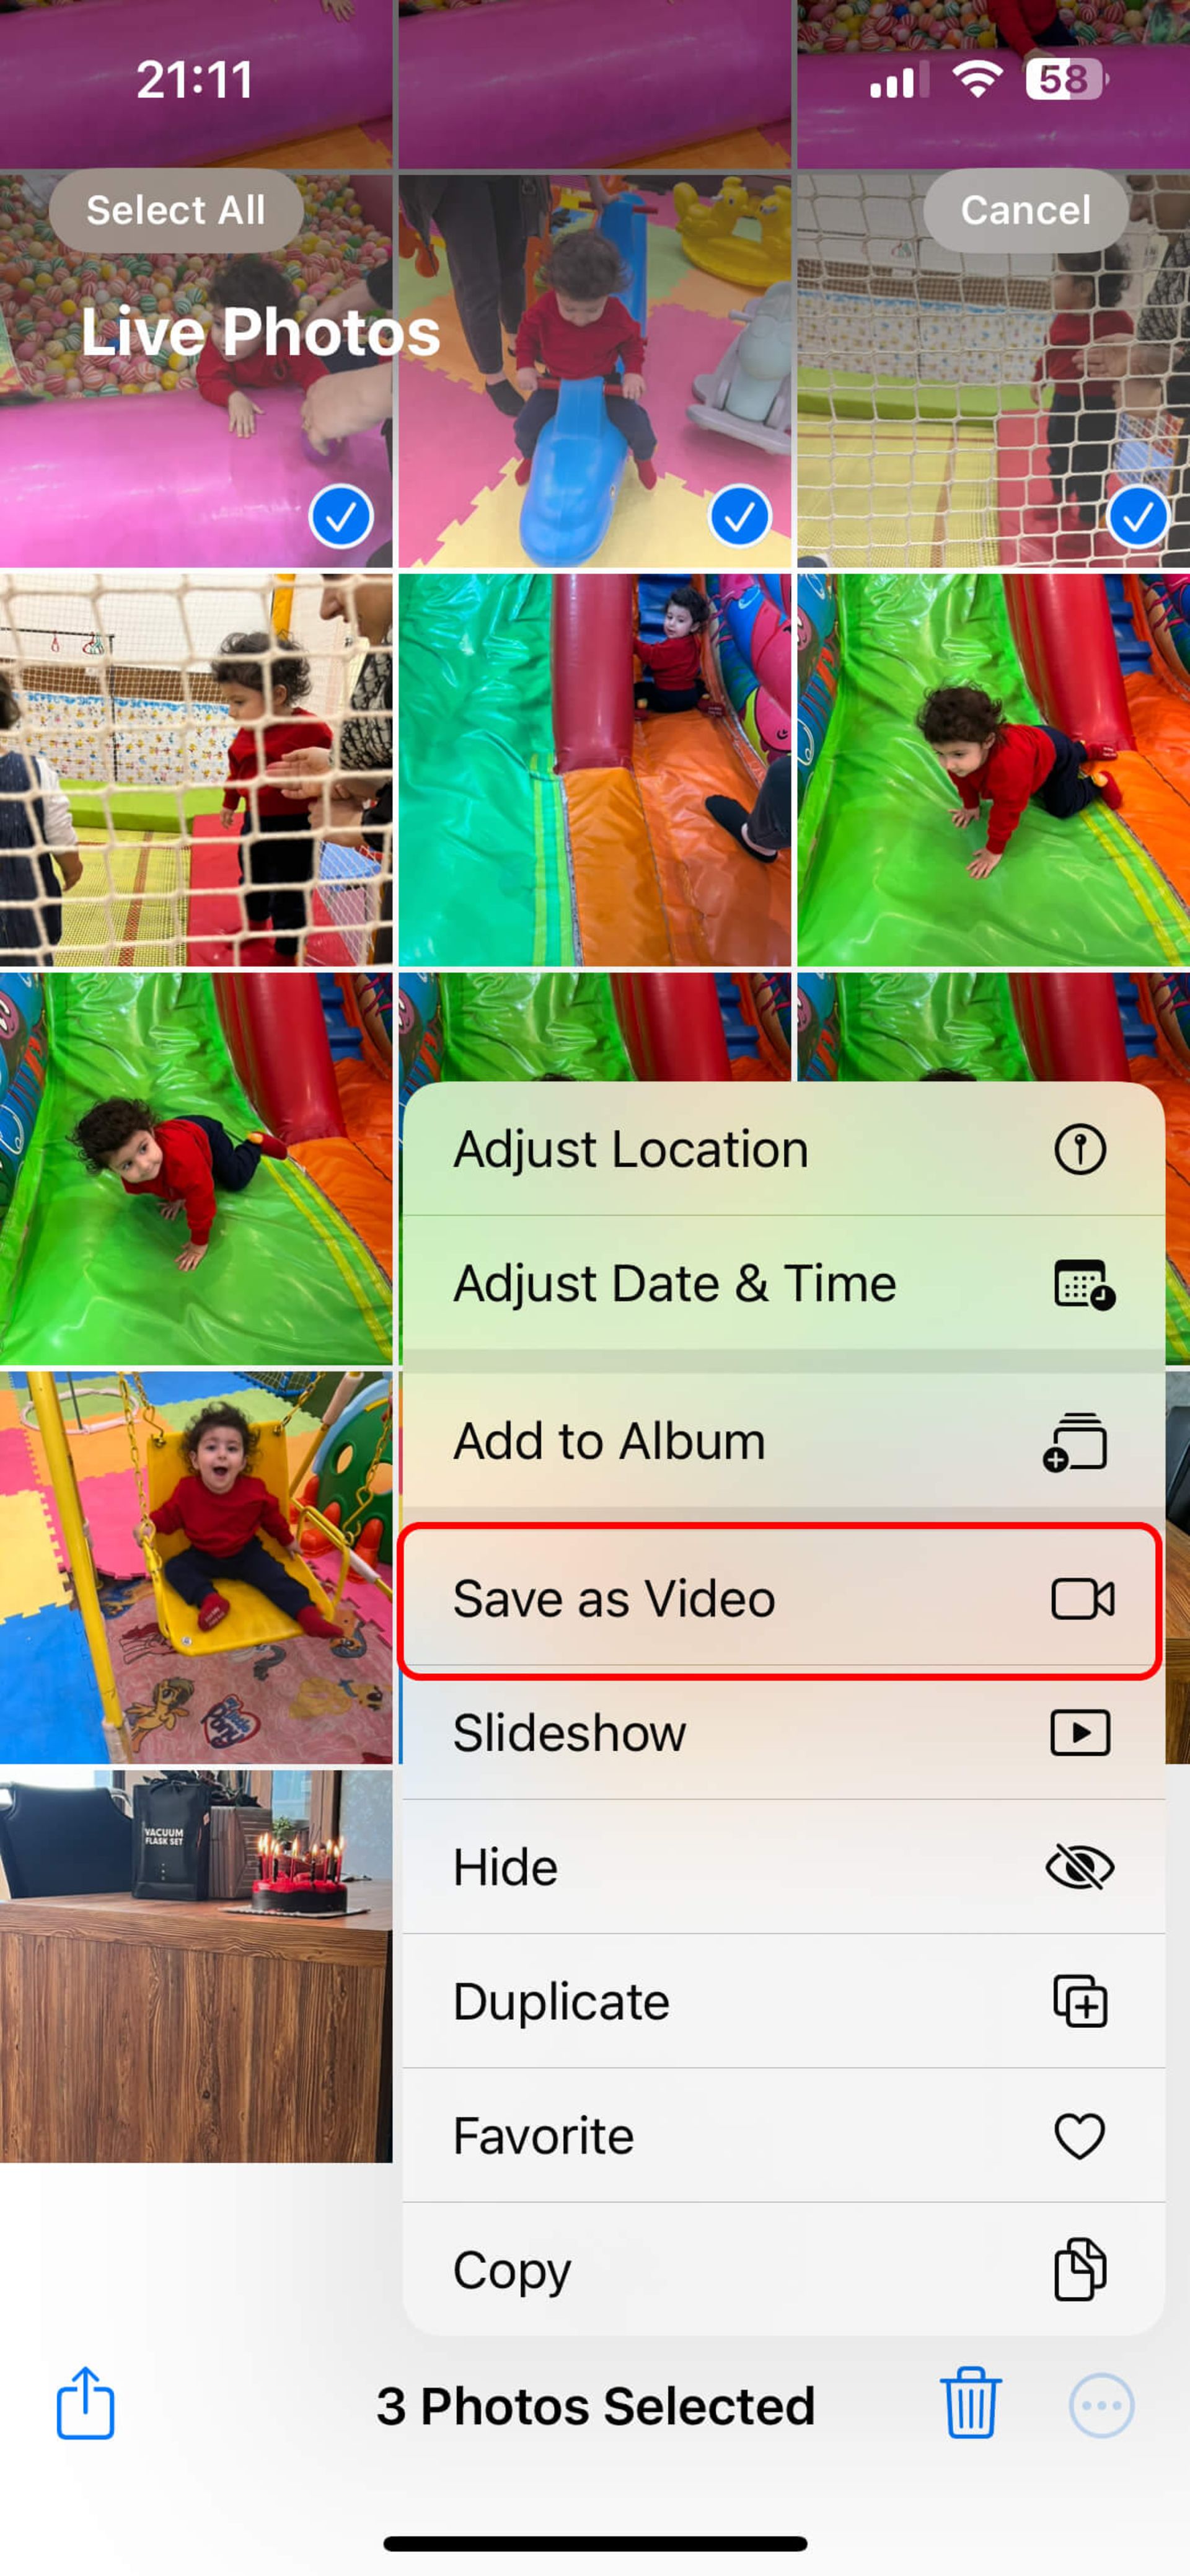 نمایش منوی پاپ آپ و انتخاب Save as Video در اپلیکیشن Photos‌ آیغون